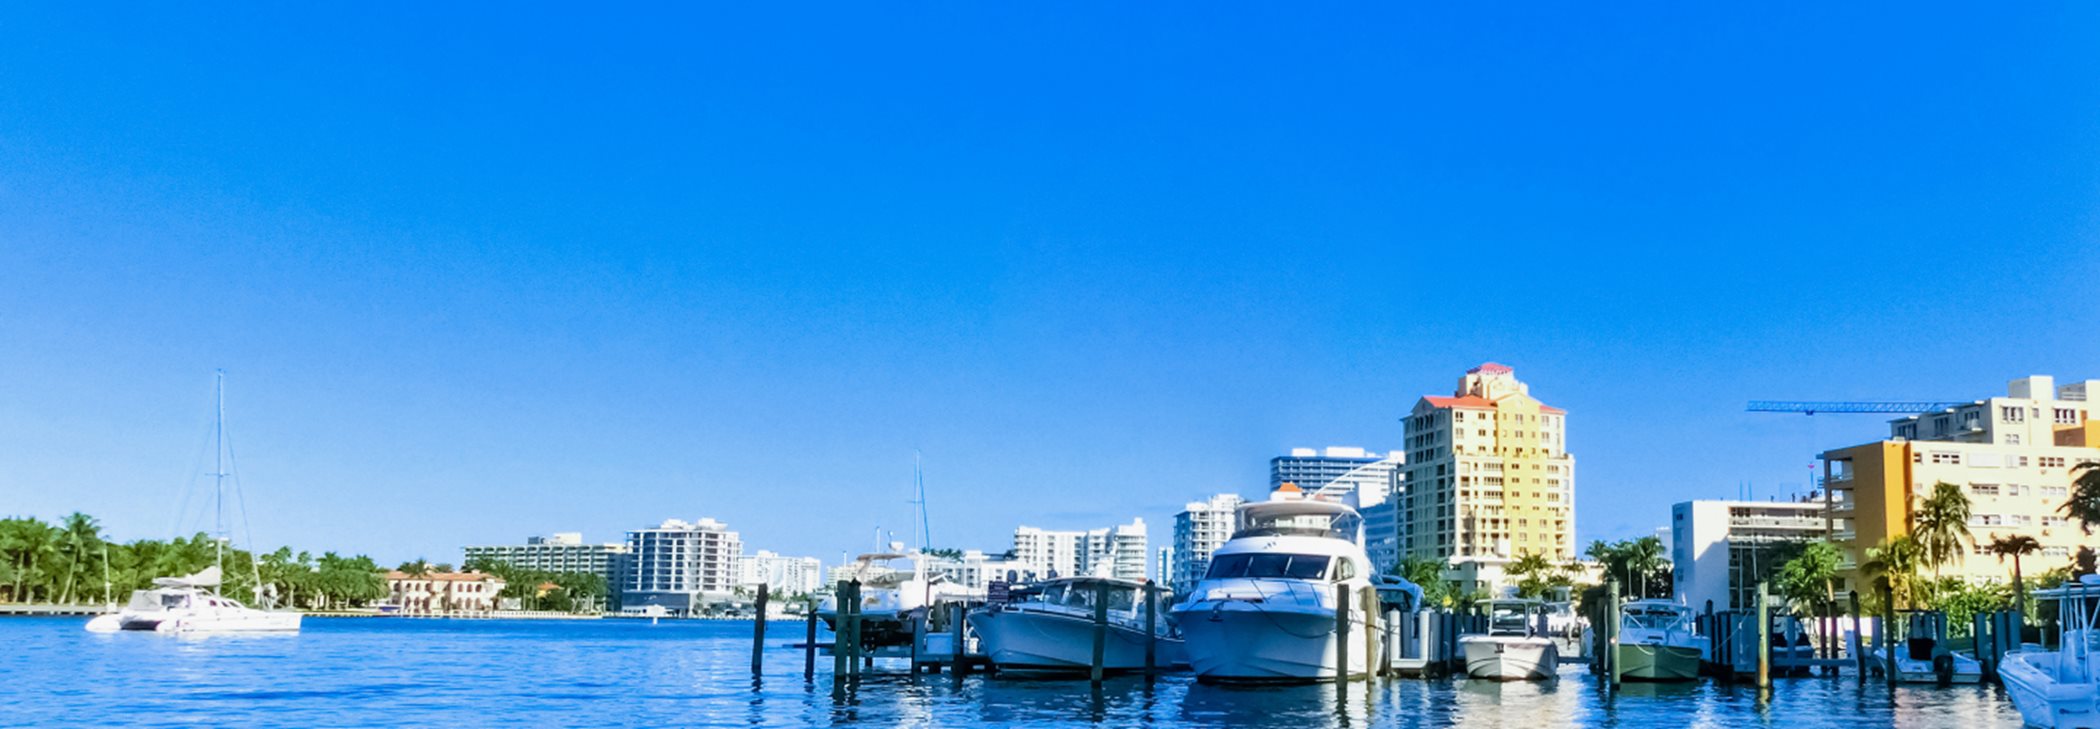 Ft. Lauderdale Marina and Skyline